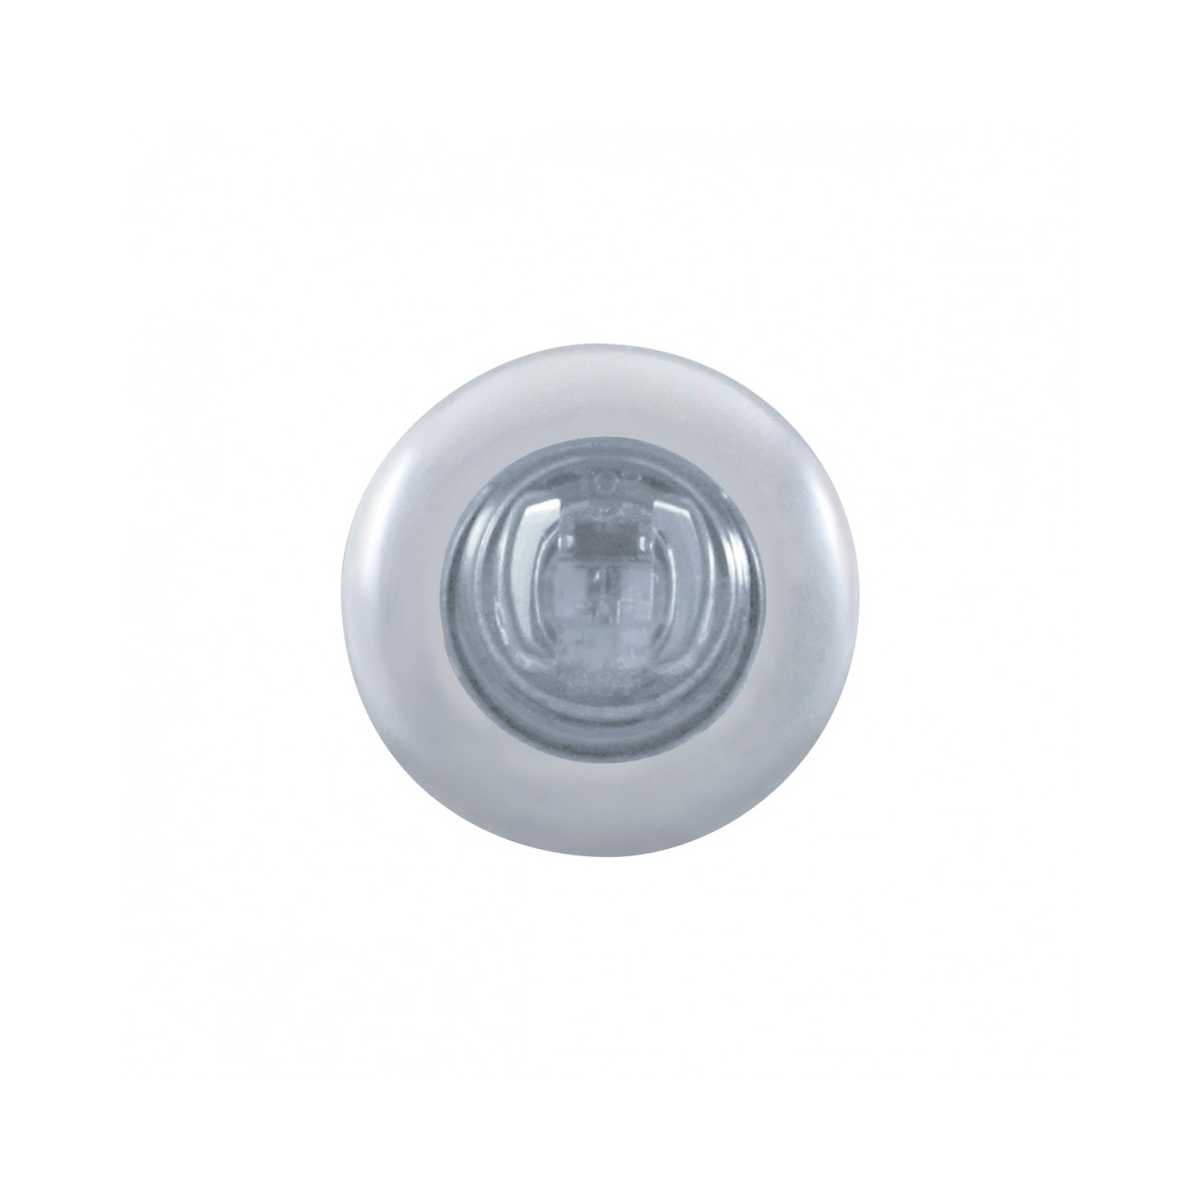 Peterbilt Air Cleaner Bracket w/ Mini Lights & Bezels - Amber LED/Clear Lens